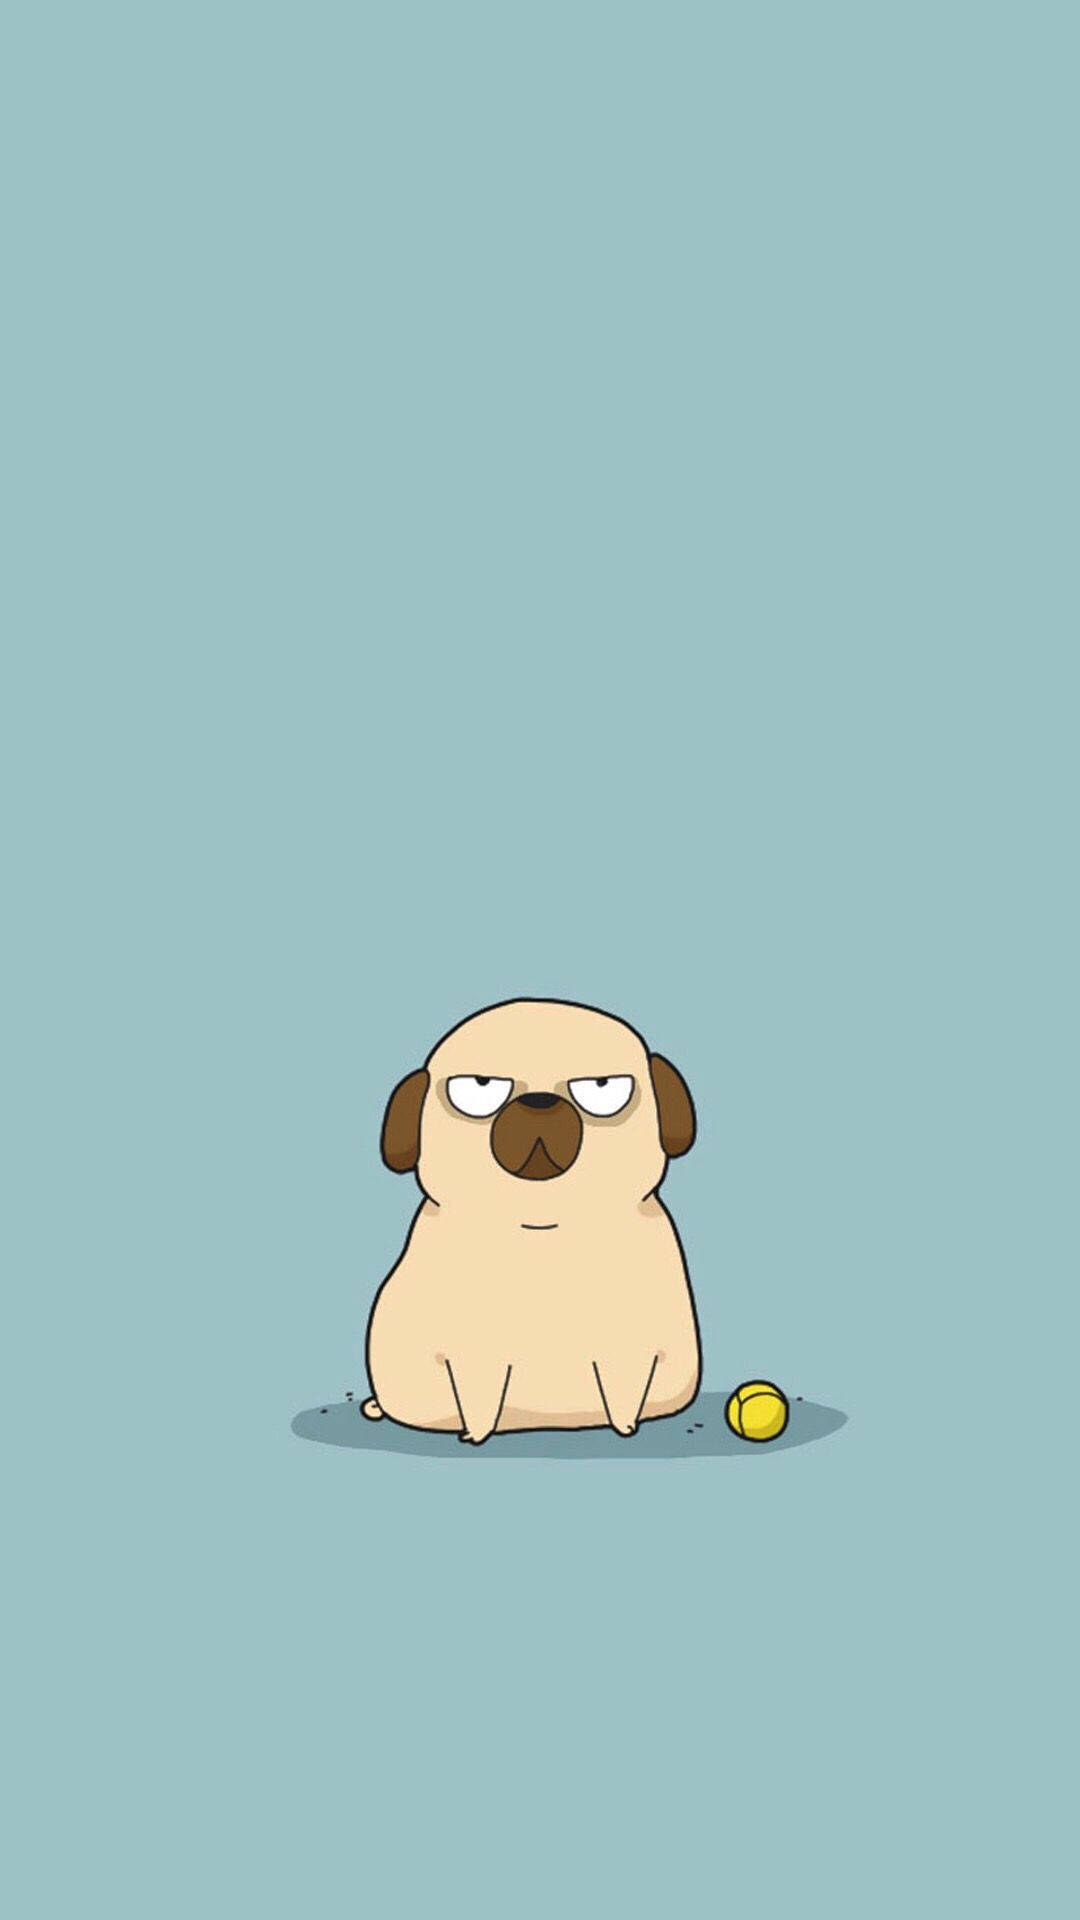 Cartoon Pug Dog With Ball